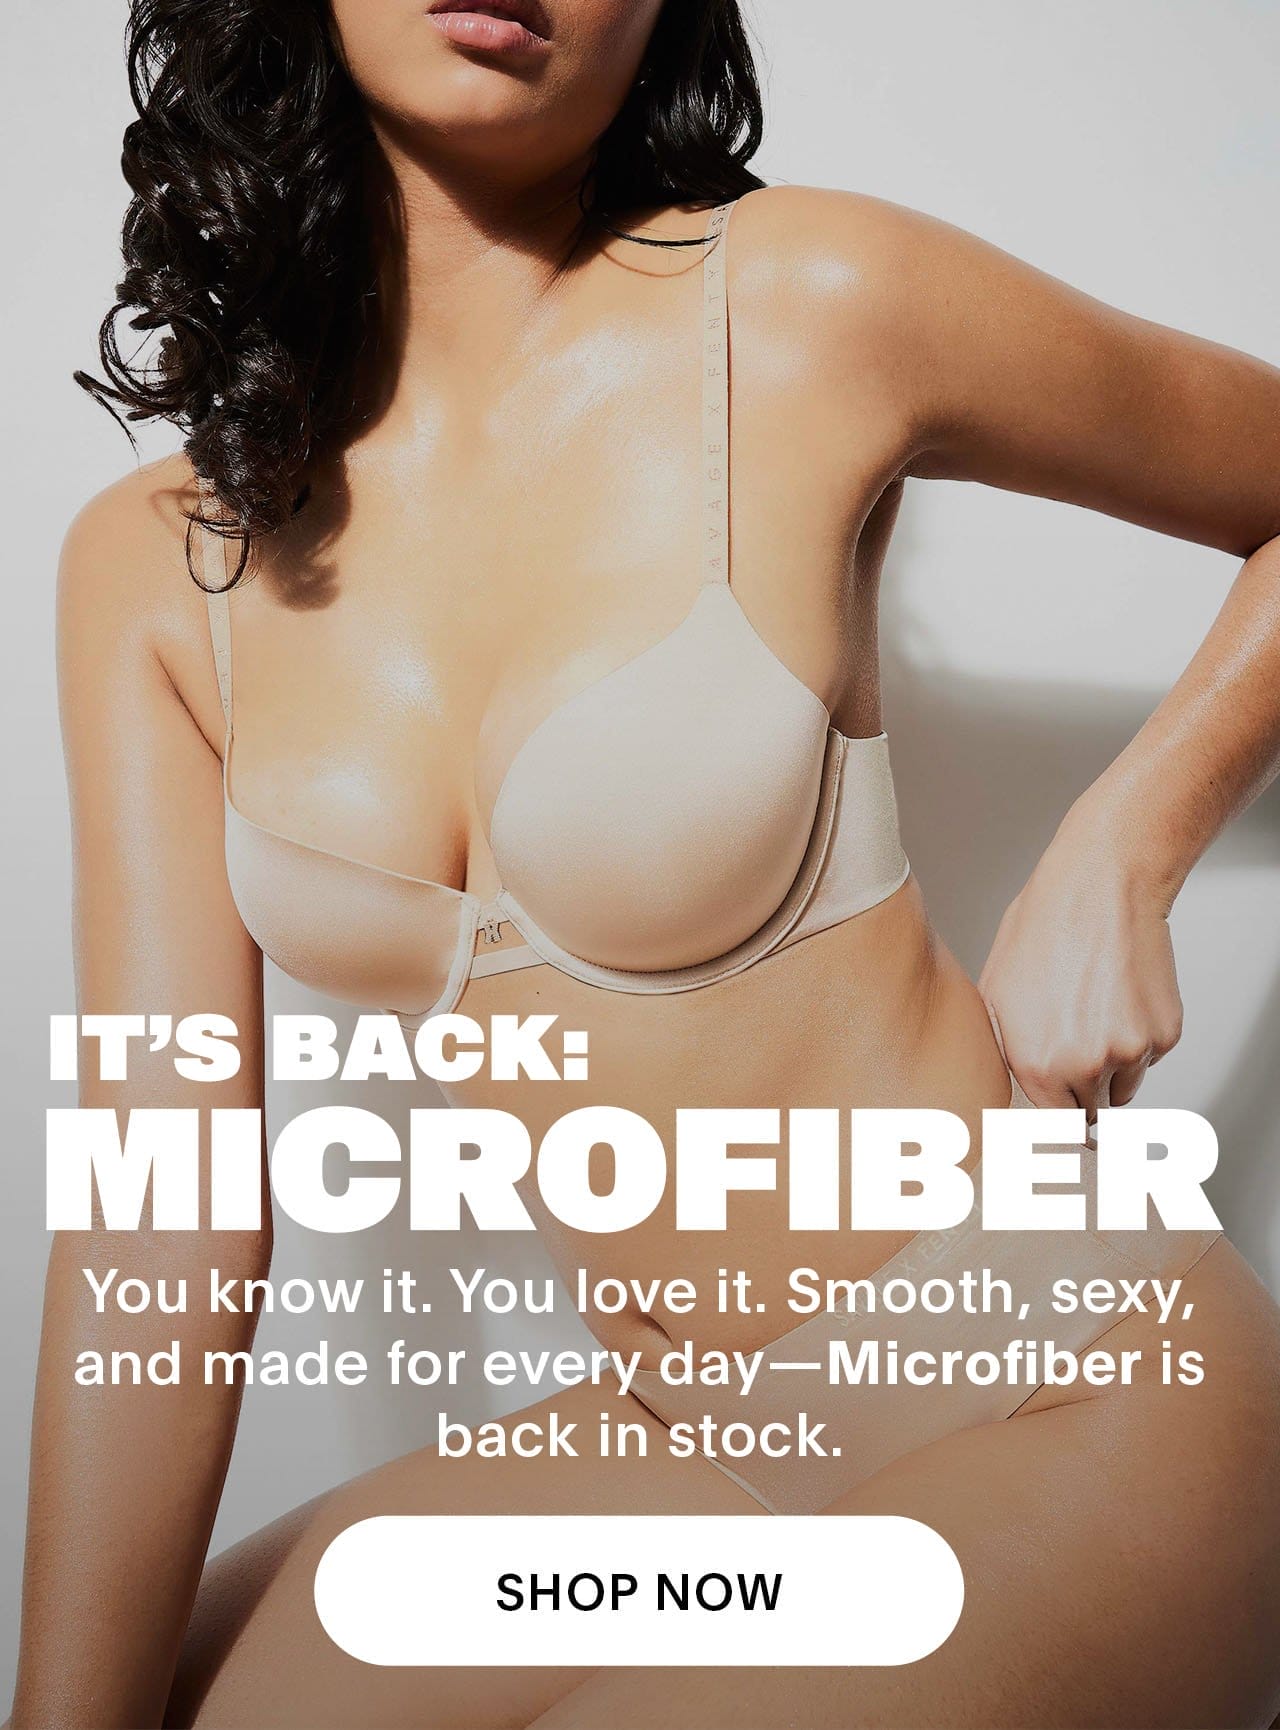 Microfiber Is Back!